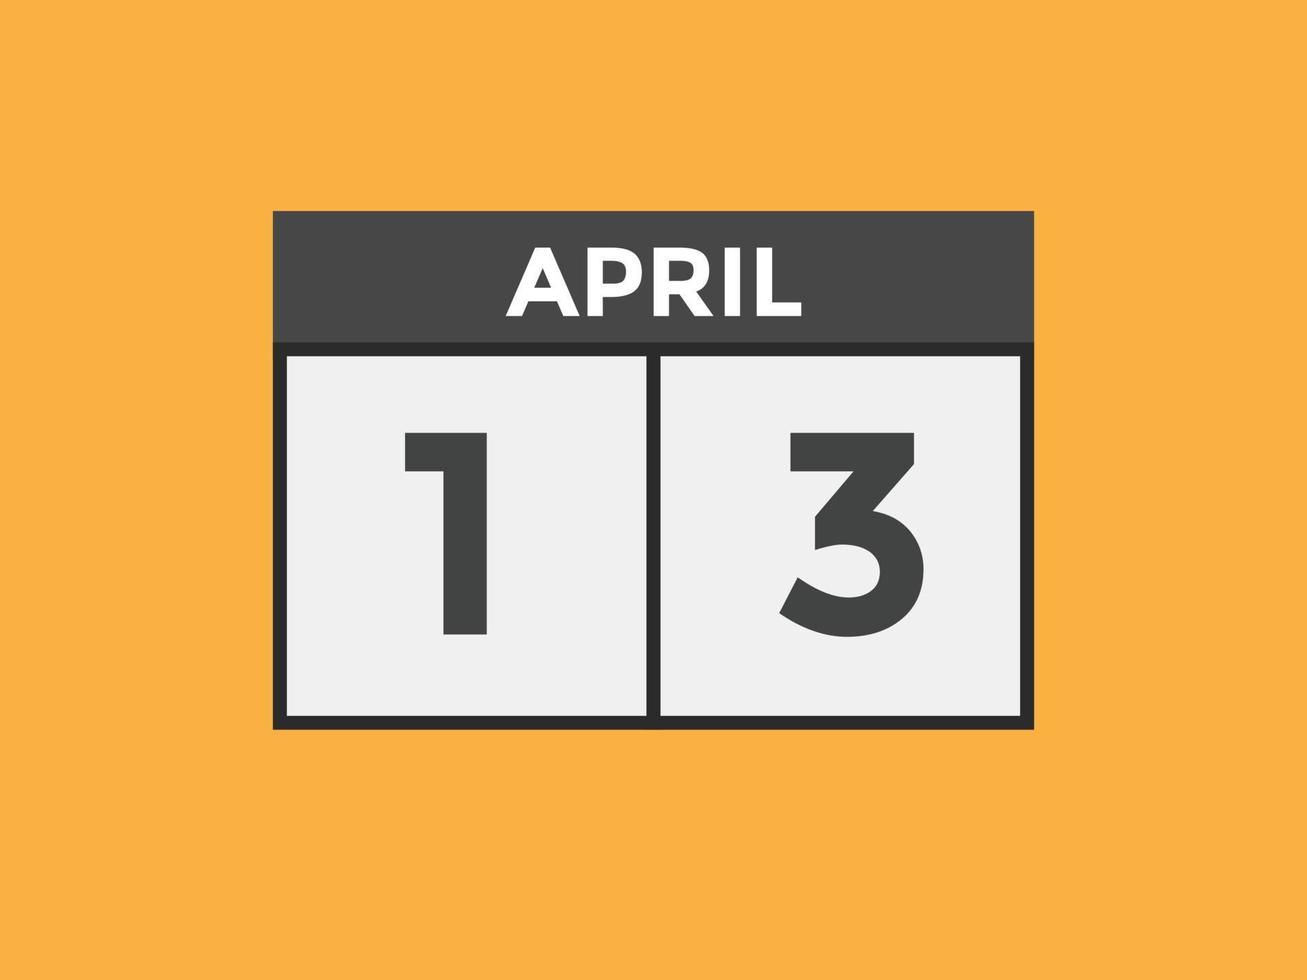 april 13 kalender påminnelse. 13: e april dagligen kalender ikon mall. kalender 13: e april ikon design mall. vektor illustration